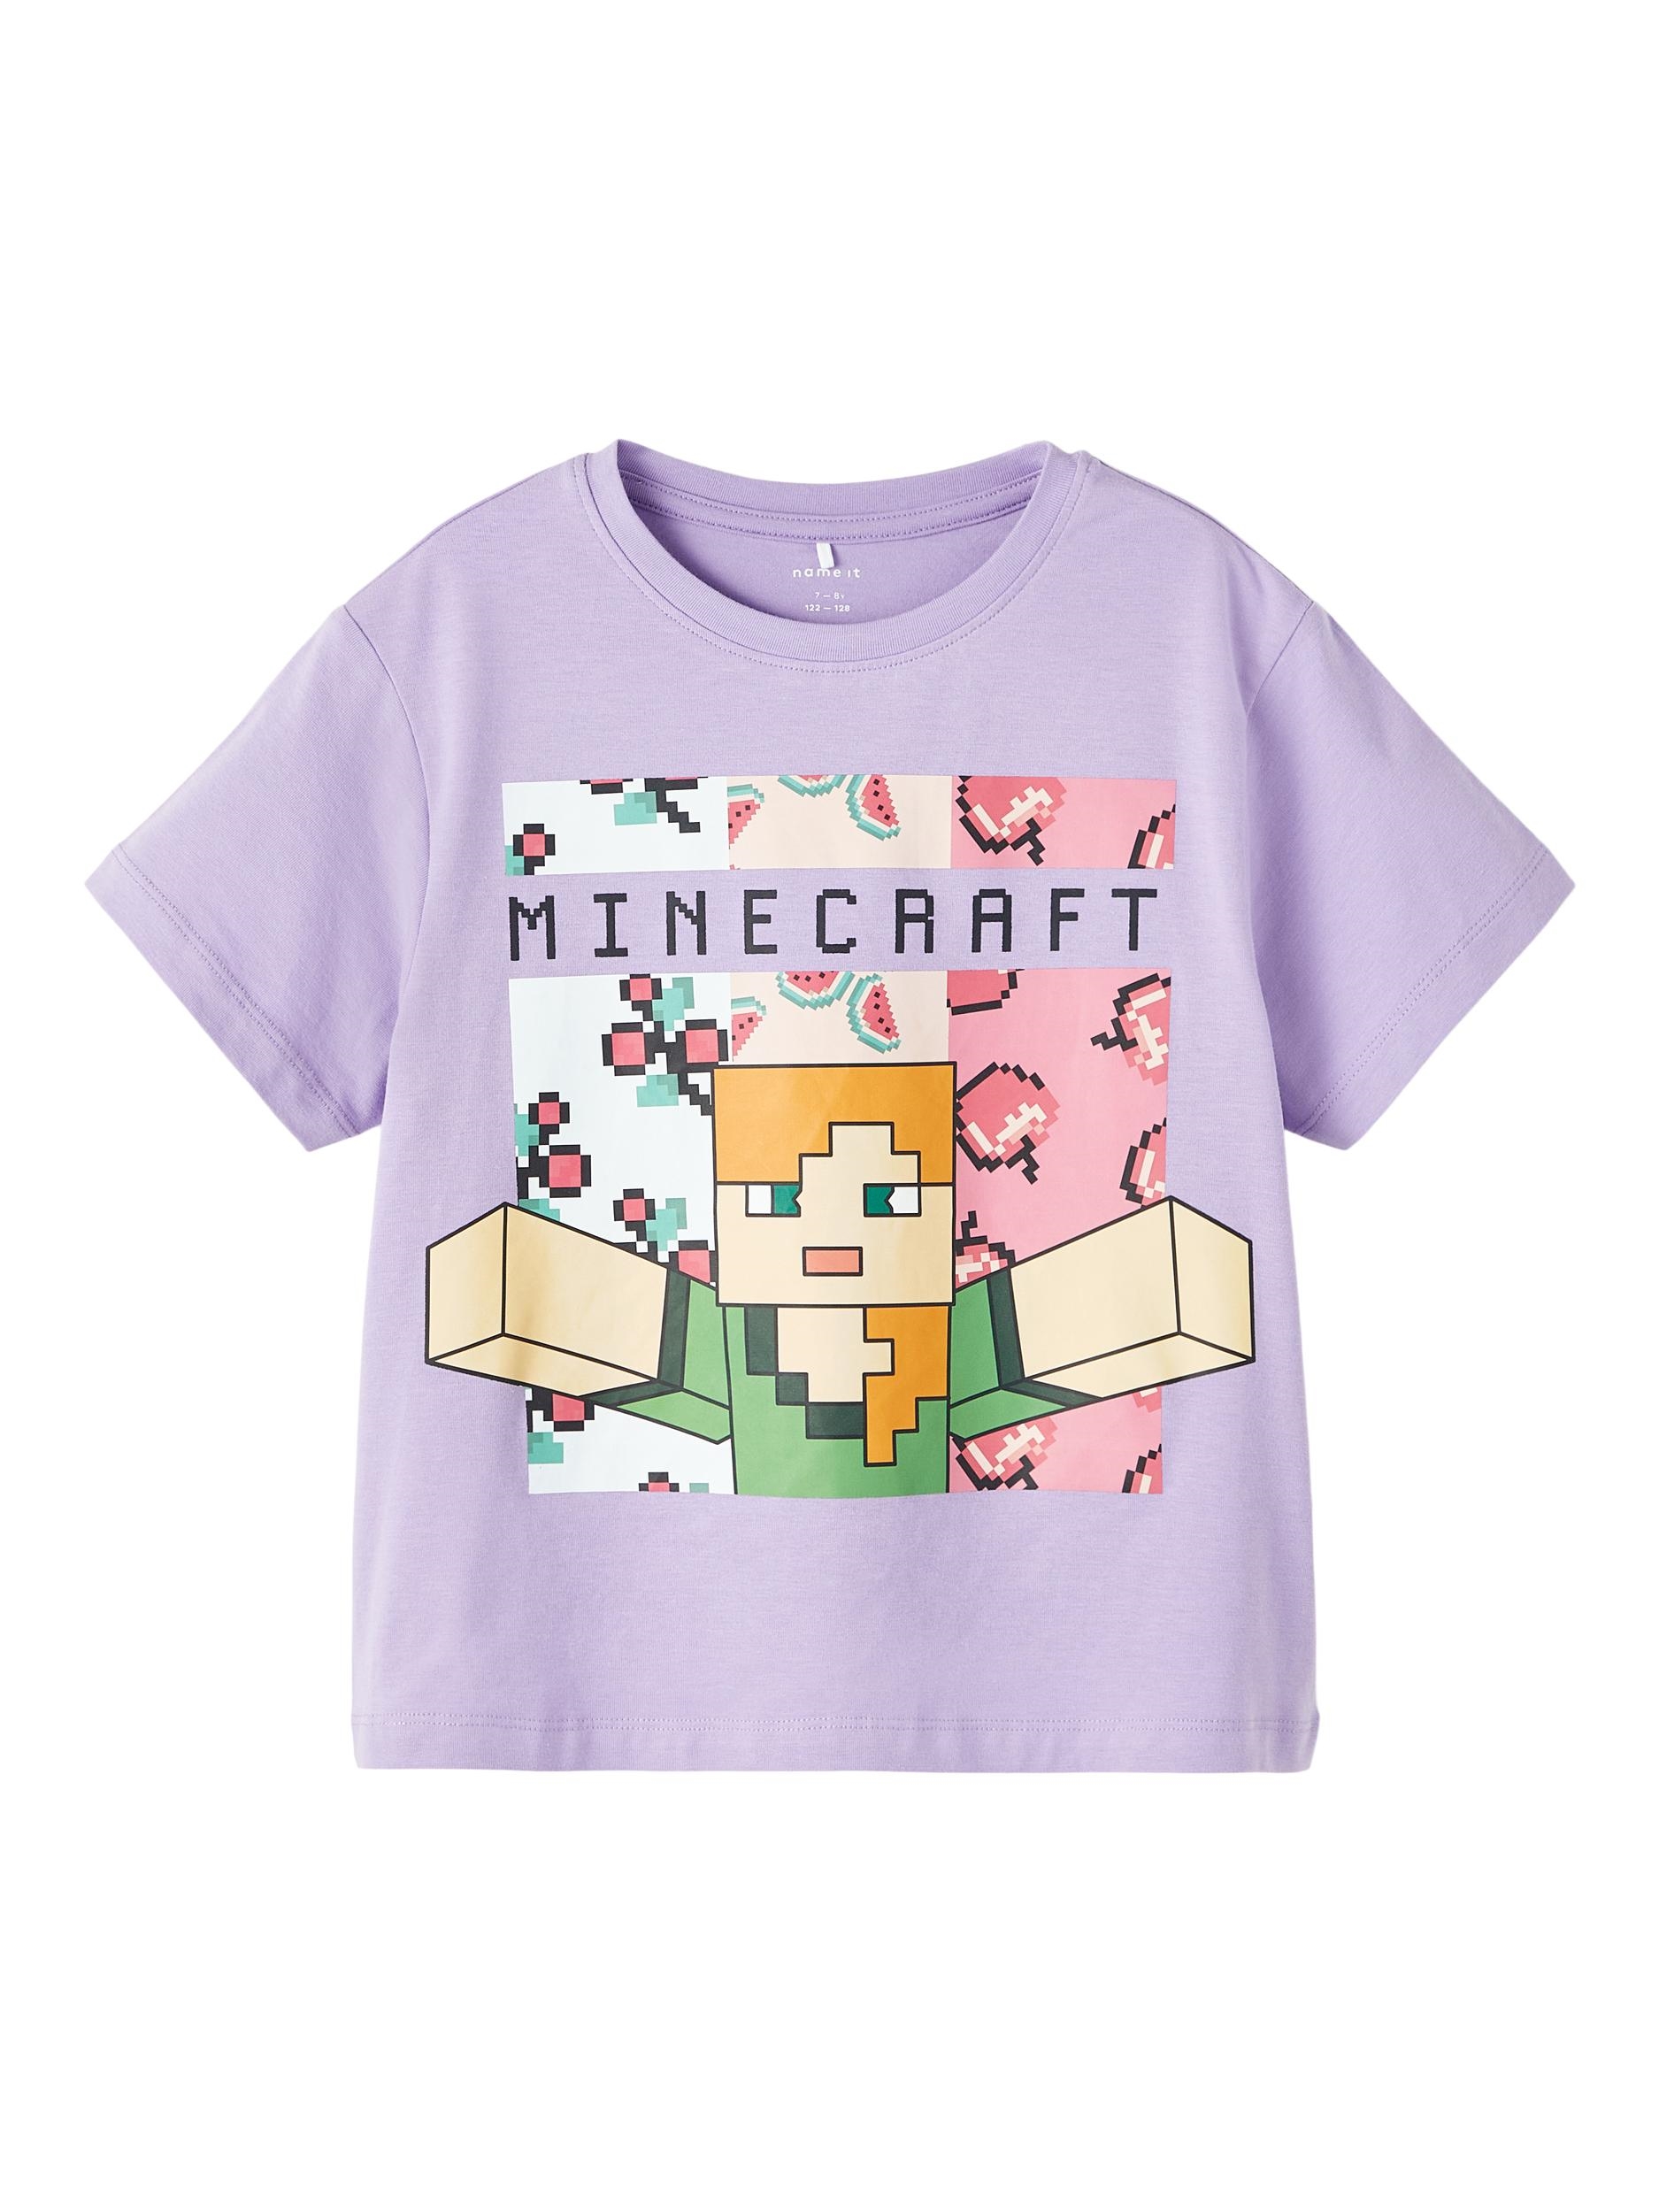 NAME IT Minecraft T-shirt